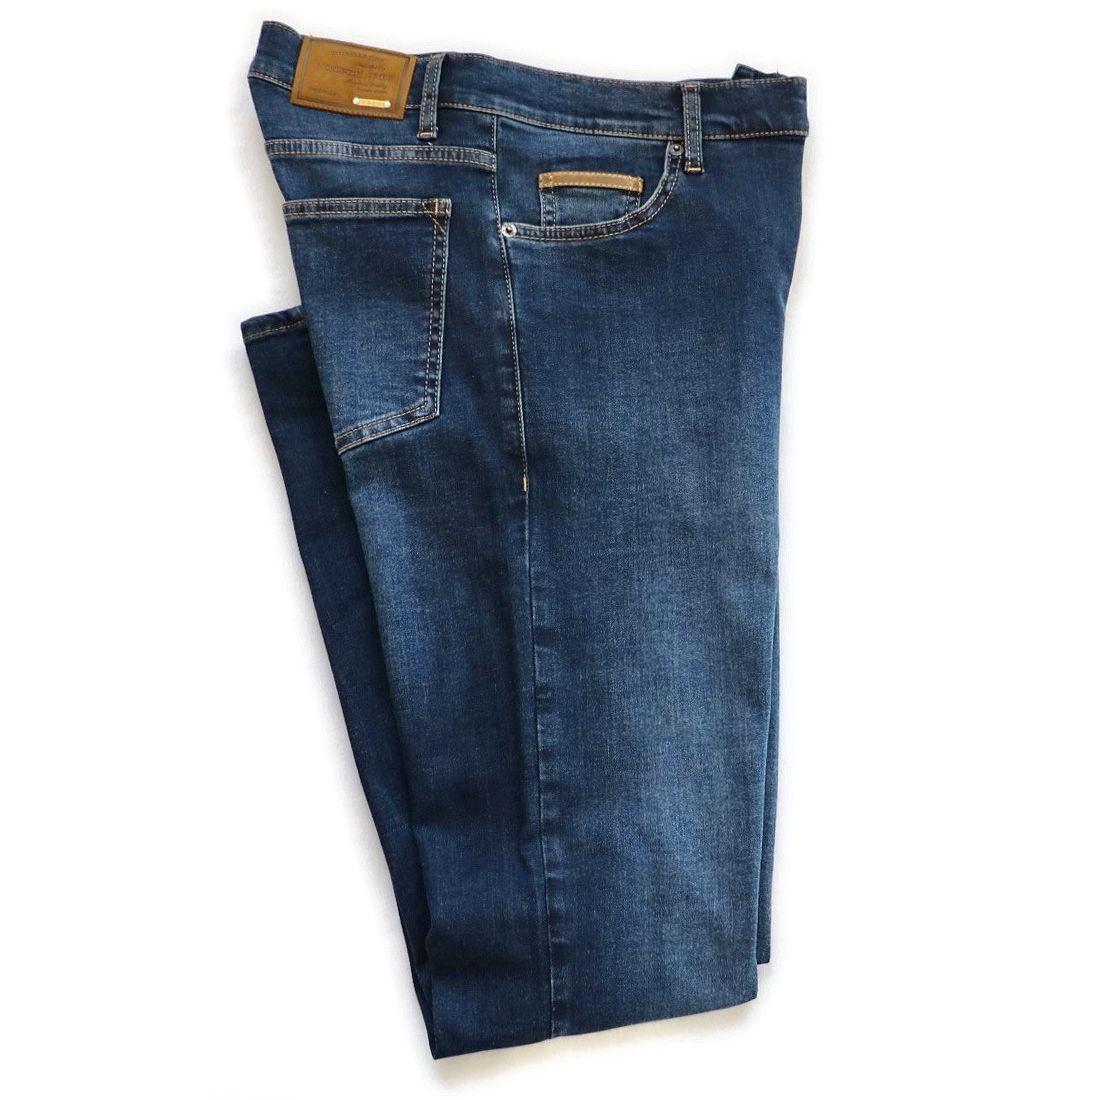 Women's London Jean Stretch Premium Quality Denim Jeans - Size 8 